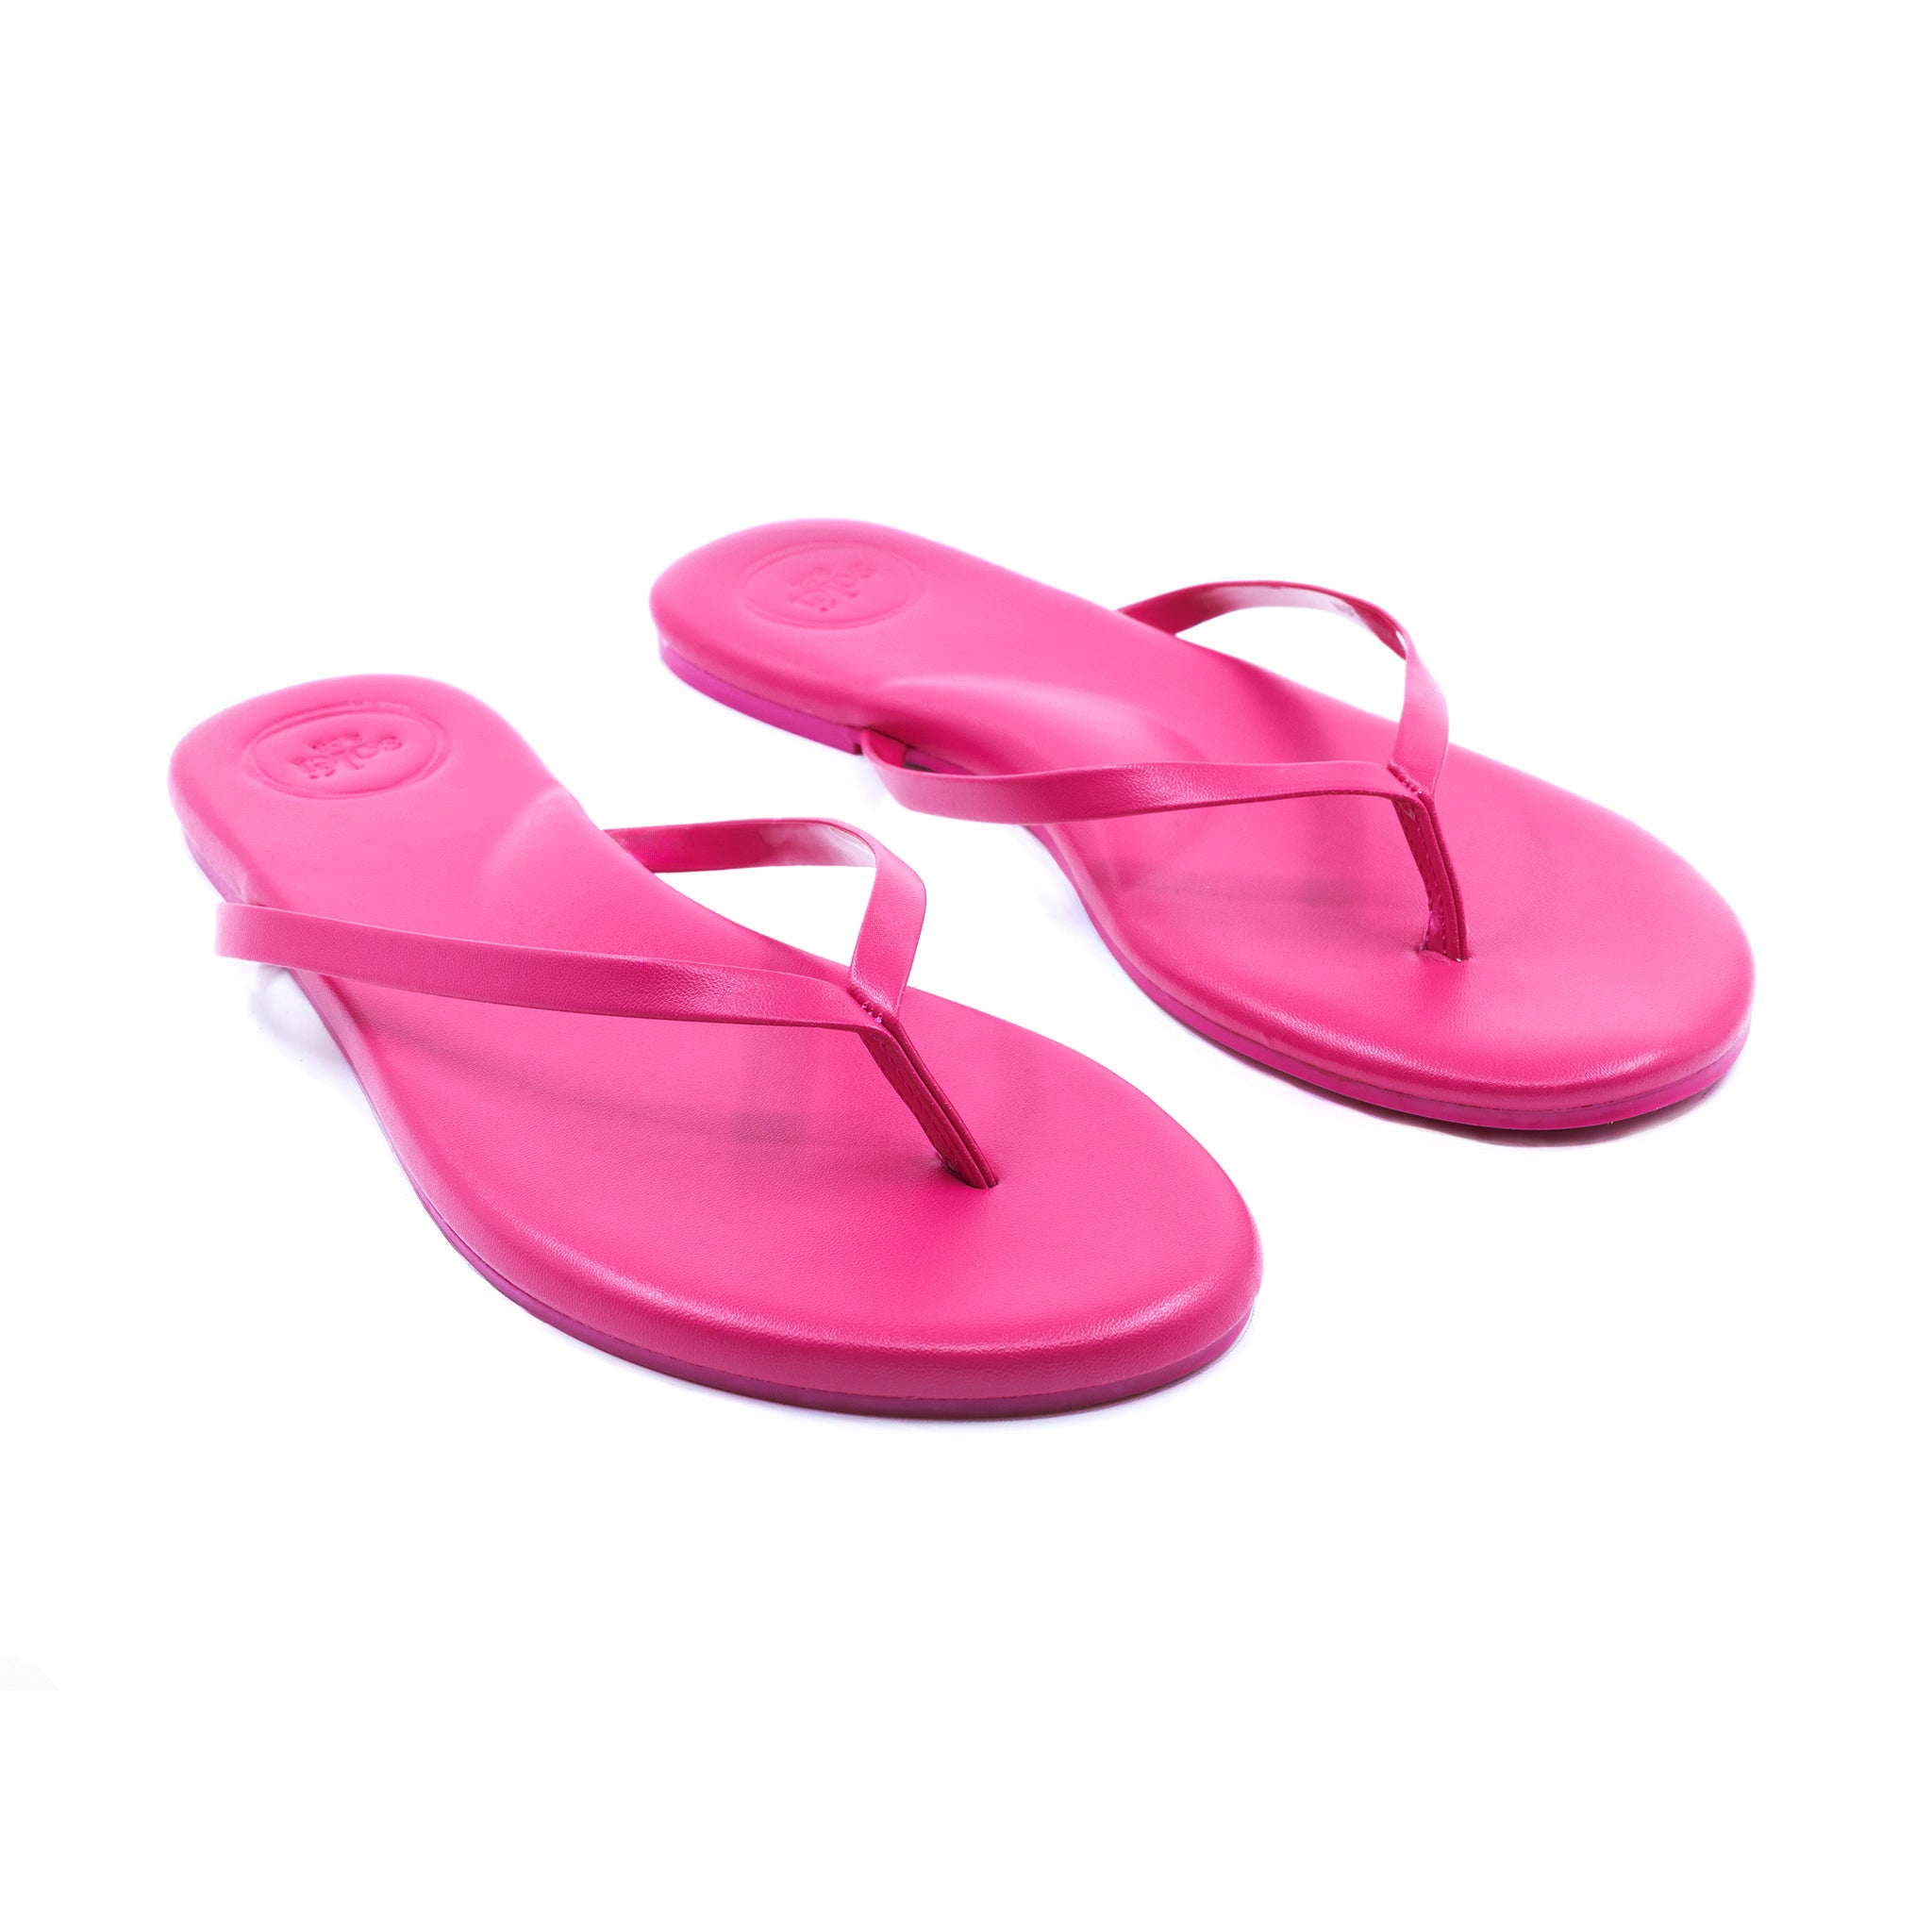 Indie Flip Flop Sandal in Hot Pink